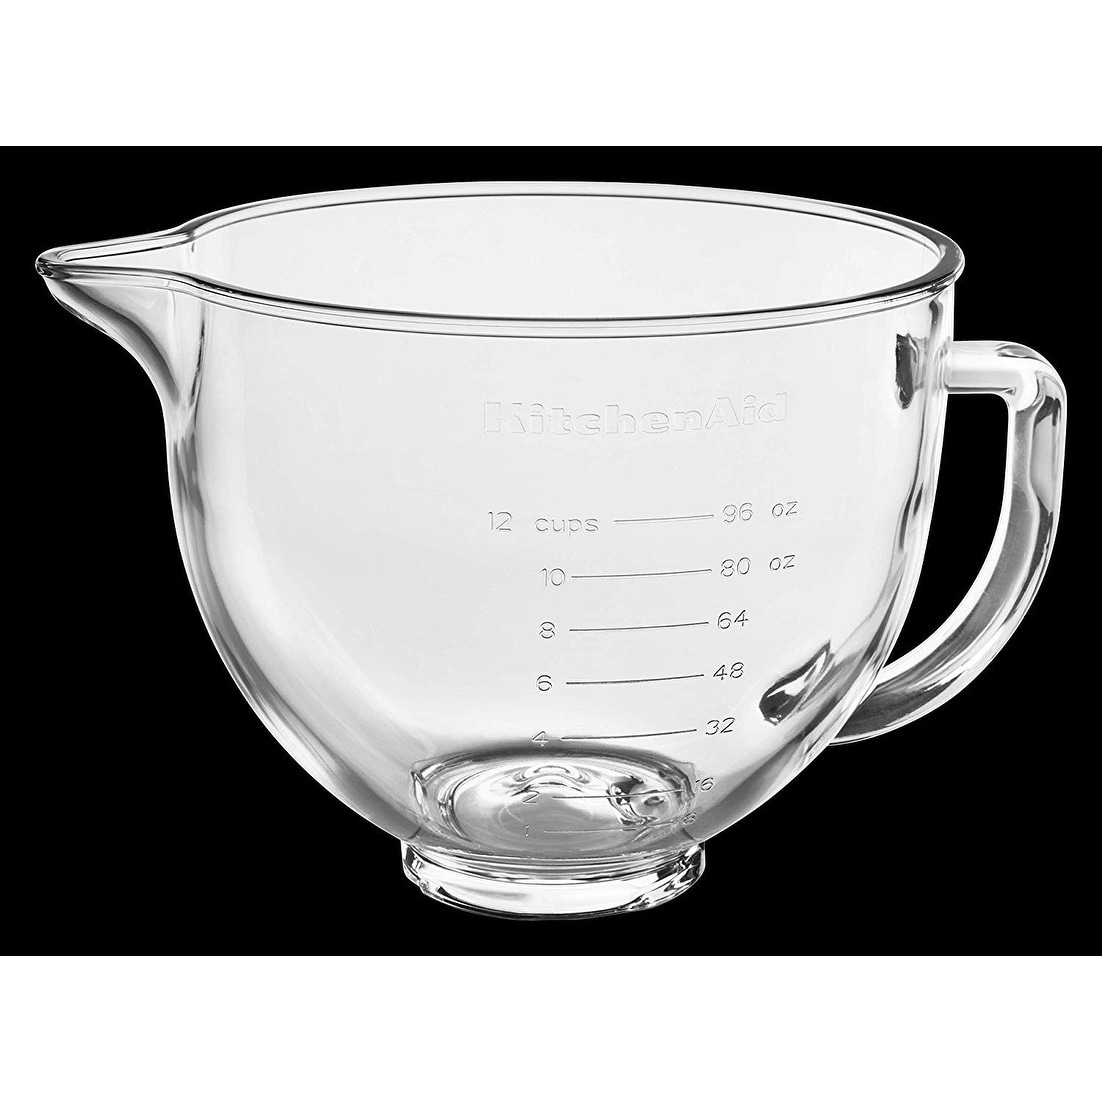 KitohonAld Stand Mixer Glass Bowl, 5 QT,compatible with KitchenAid Artisan 5KSM125, 5KSM150, 5KSM175, 5KSM7580, KSM150, RRK150,K